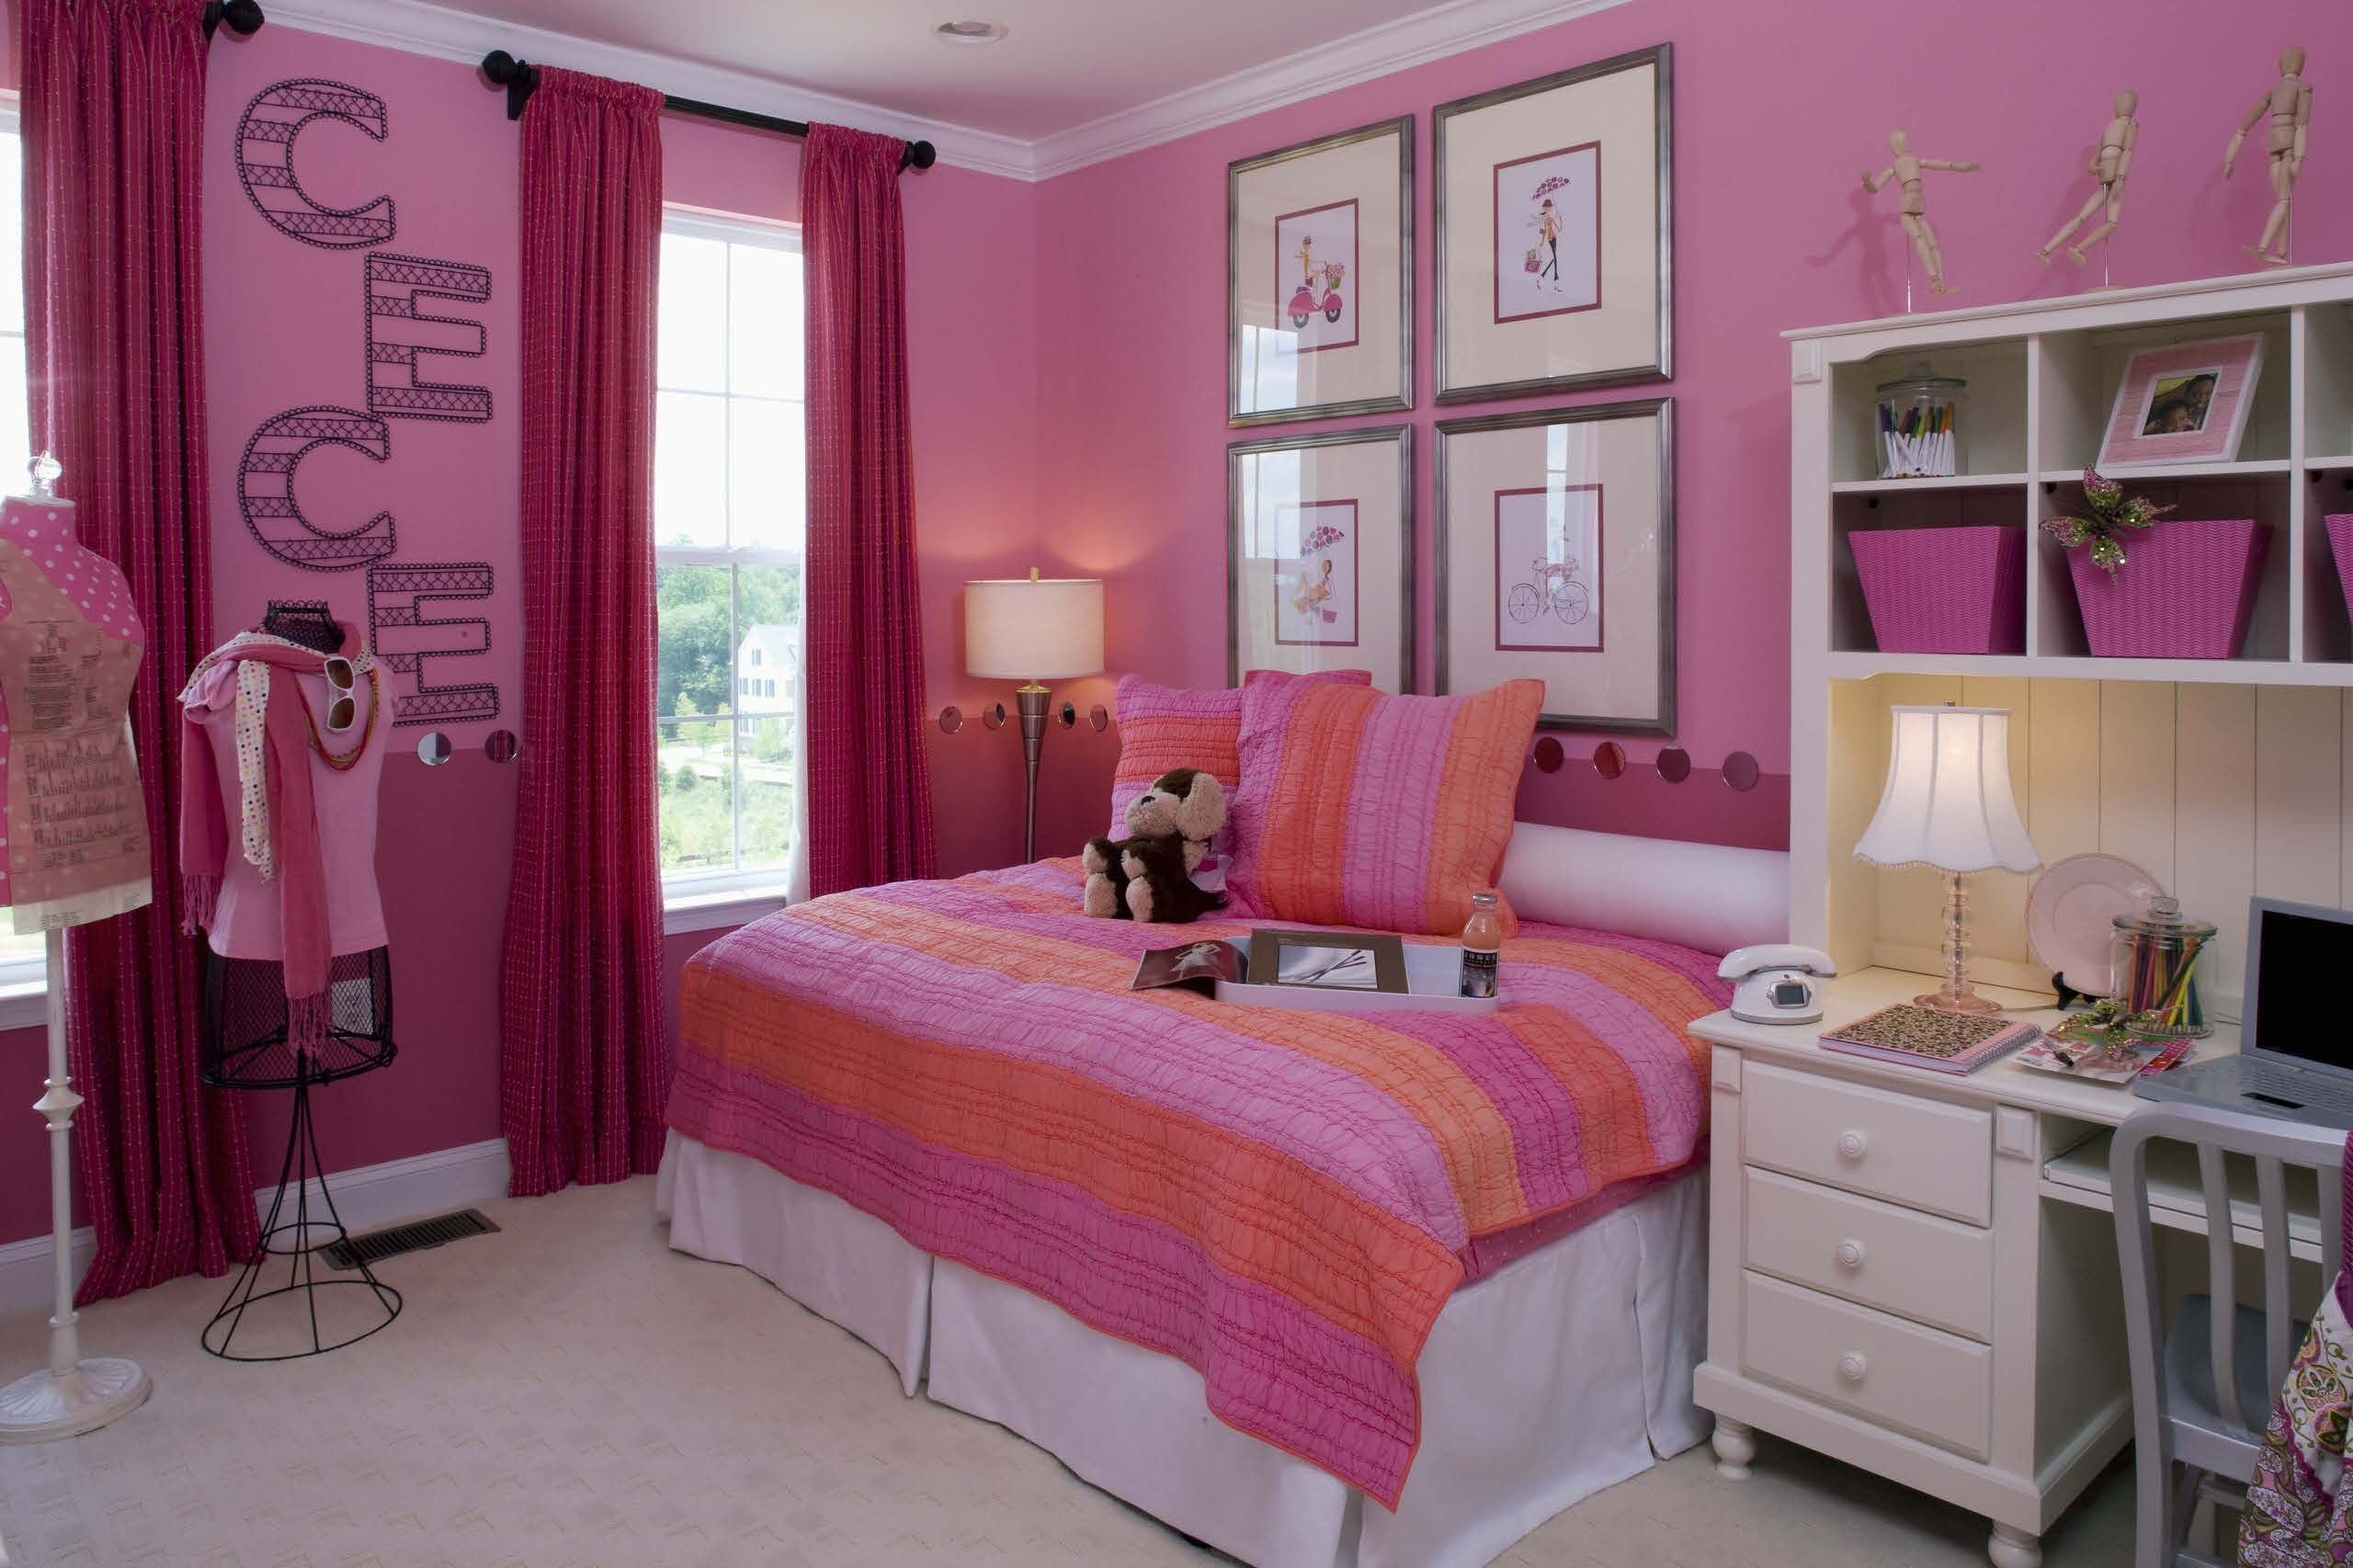 Комната в розовых тонах. Комната для девочки. Розовая комната для девочки. Комната для девочки подростка. Спальня в розовых тонах.